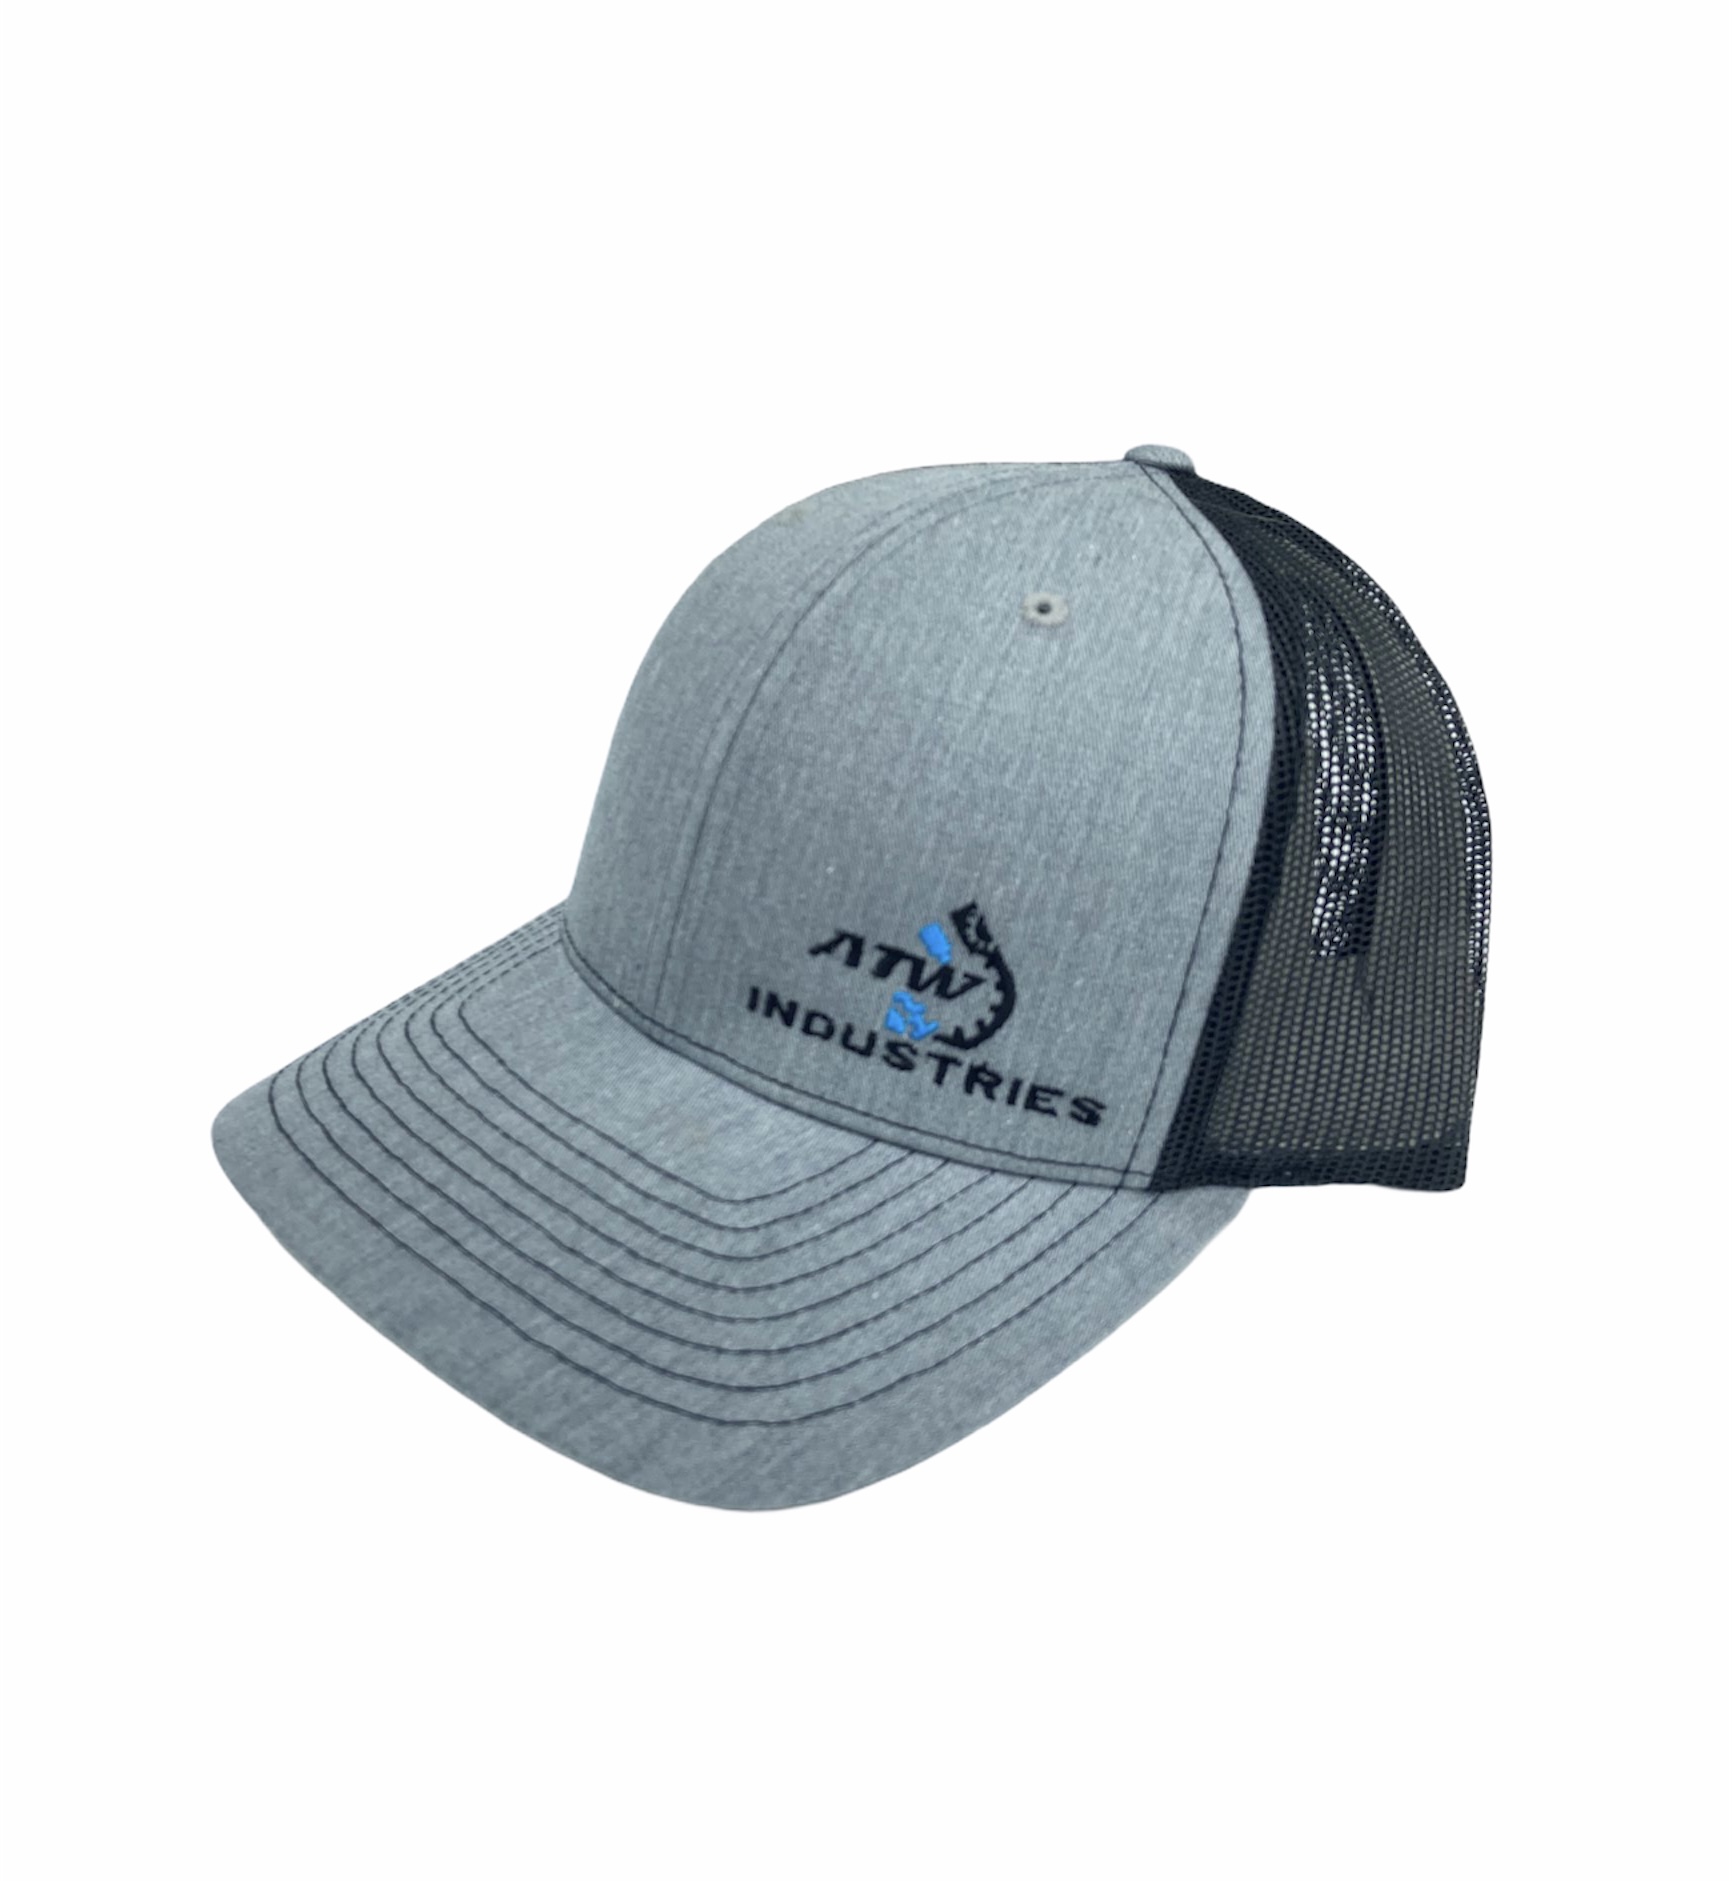 Light Grey/Black Mesh Trucker Hat – ATW Industries